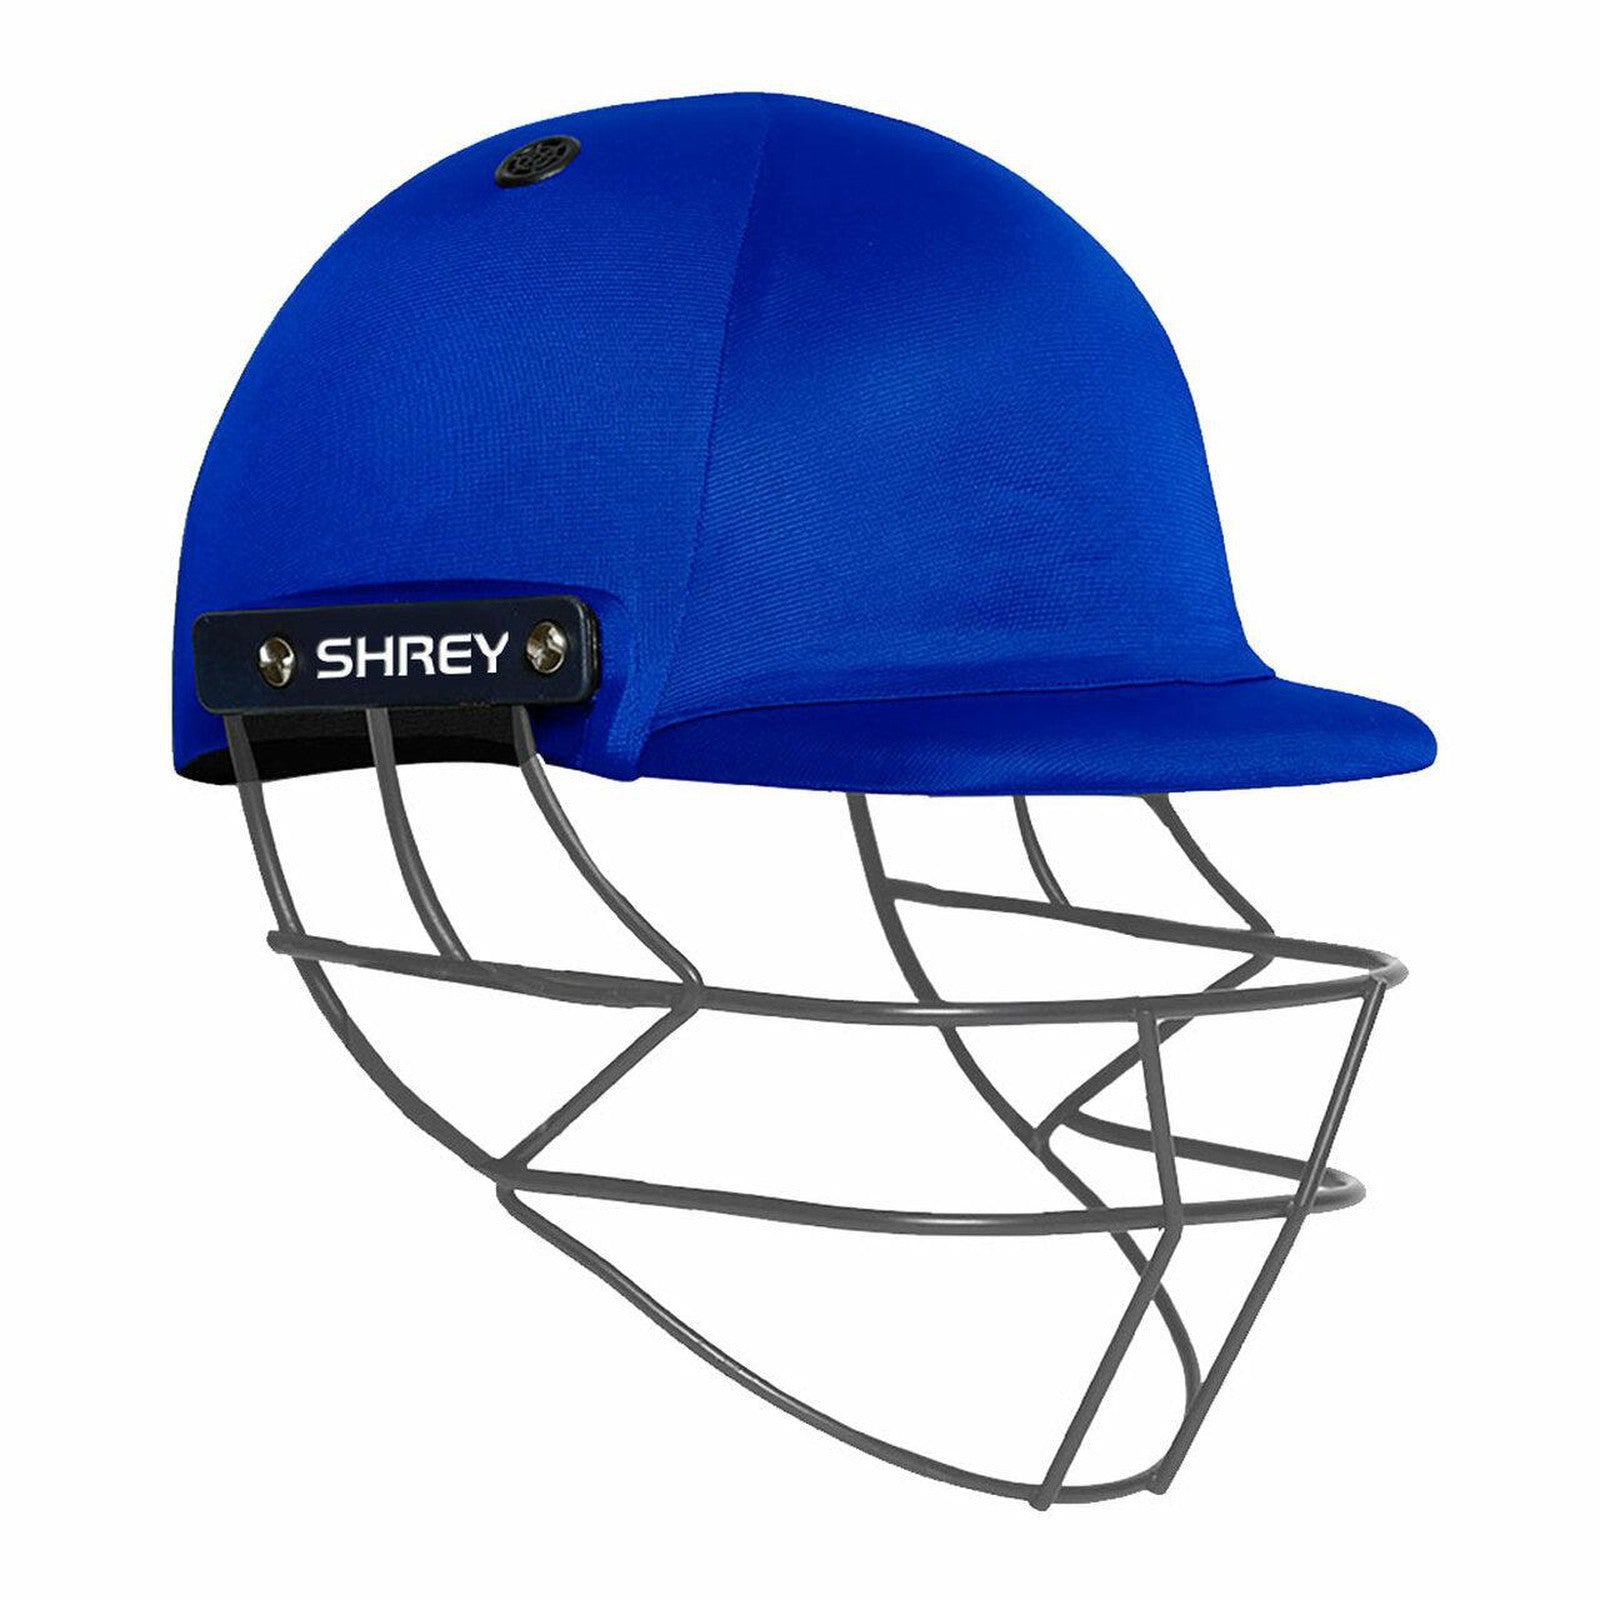 Shrey Performance 2.0 Cricket Helmet With Mild Steel - Royal Blue Youth